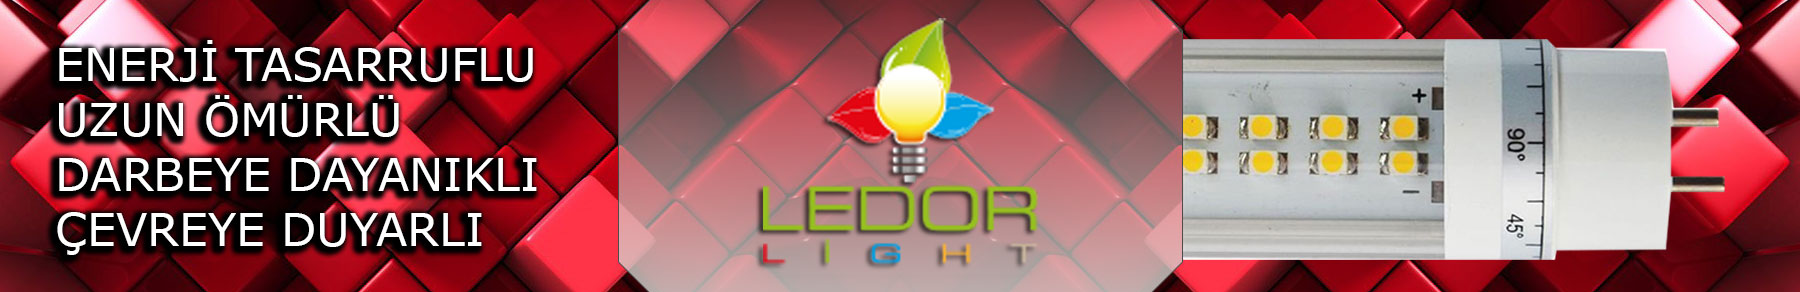 Ledor Light